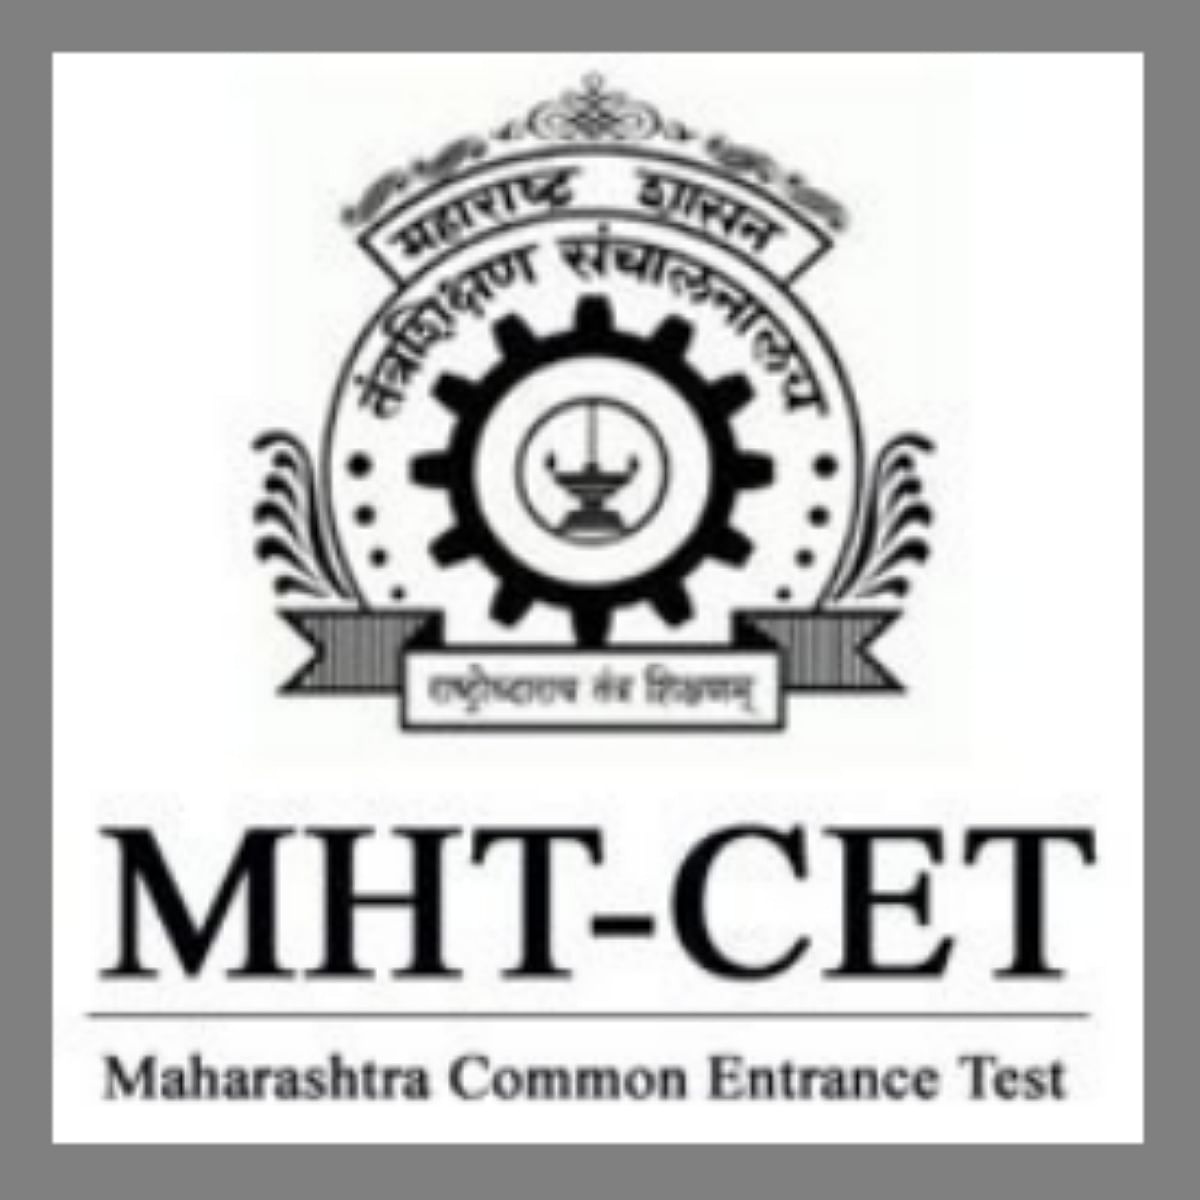 MHT CET 2020 Engineering, Law & Hospitality Exams Postponed, New Dates Soon